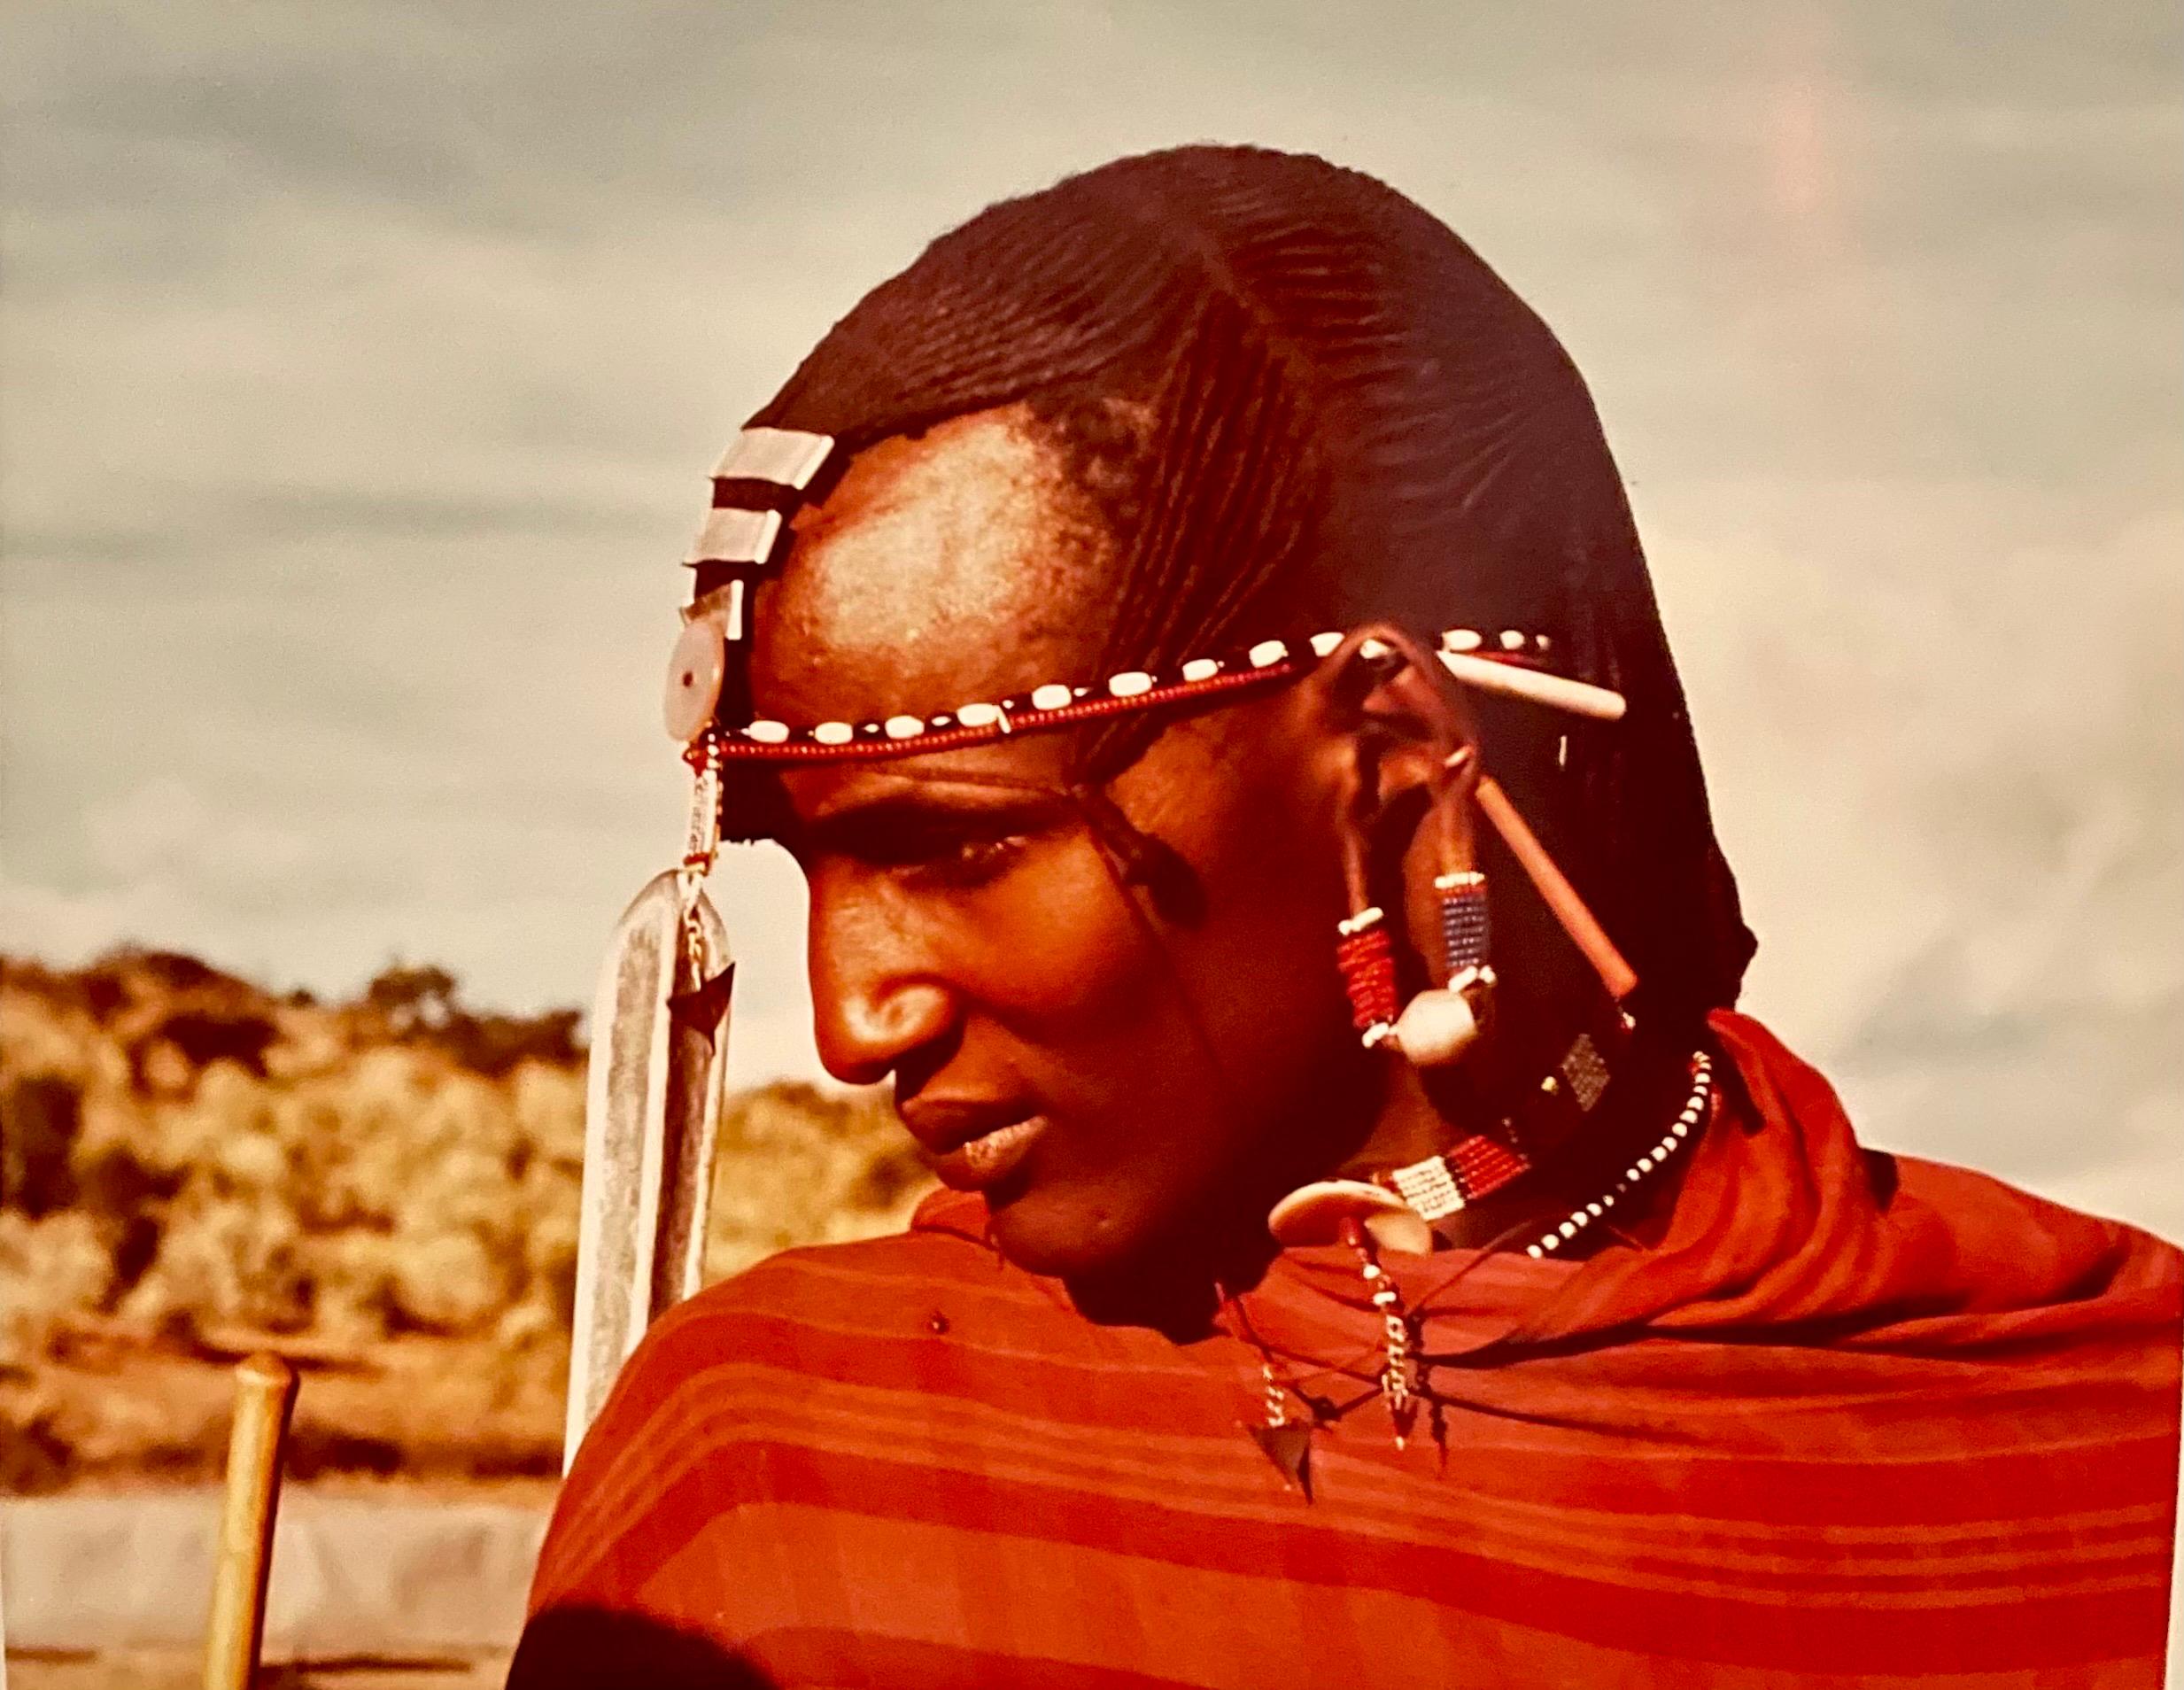 Carol Beckwith Portrait Photograph - Rare Vintage Color C Print Photograph African Maasai Warrior Chromogenic Photo 